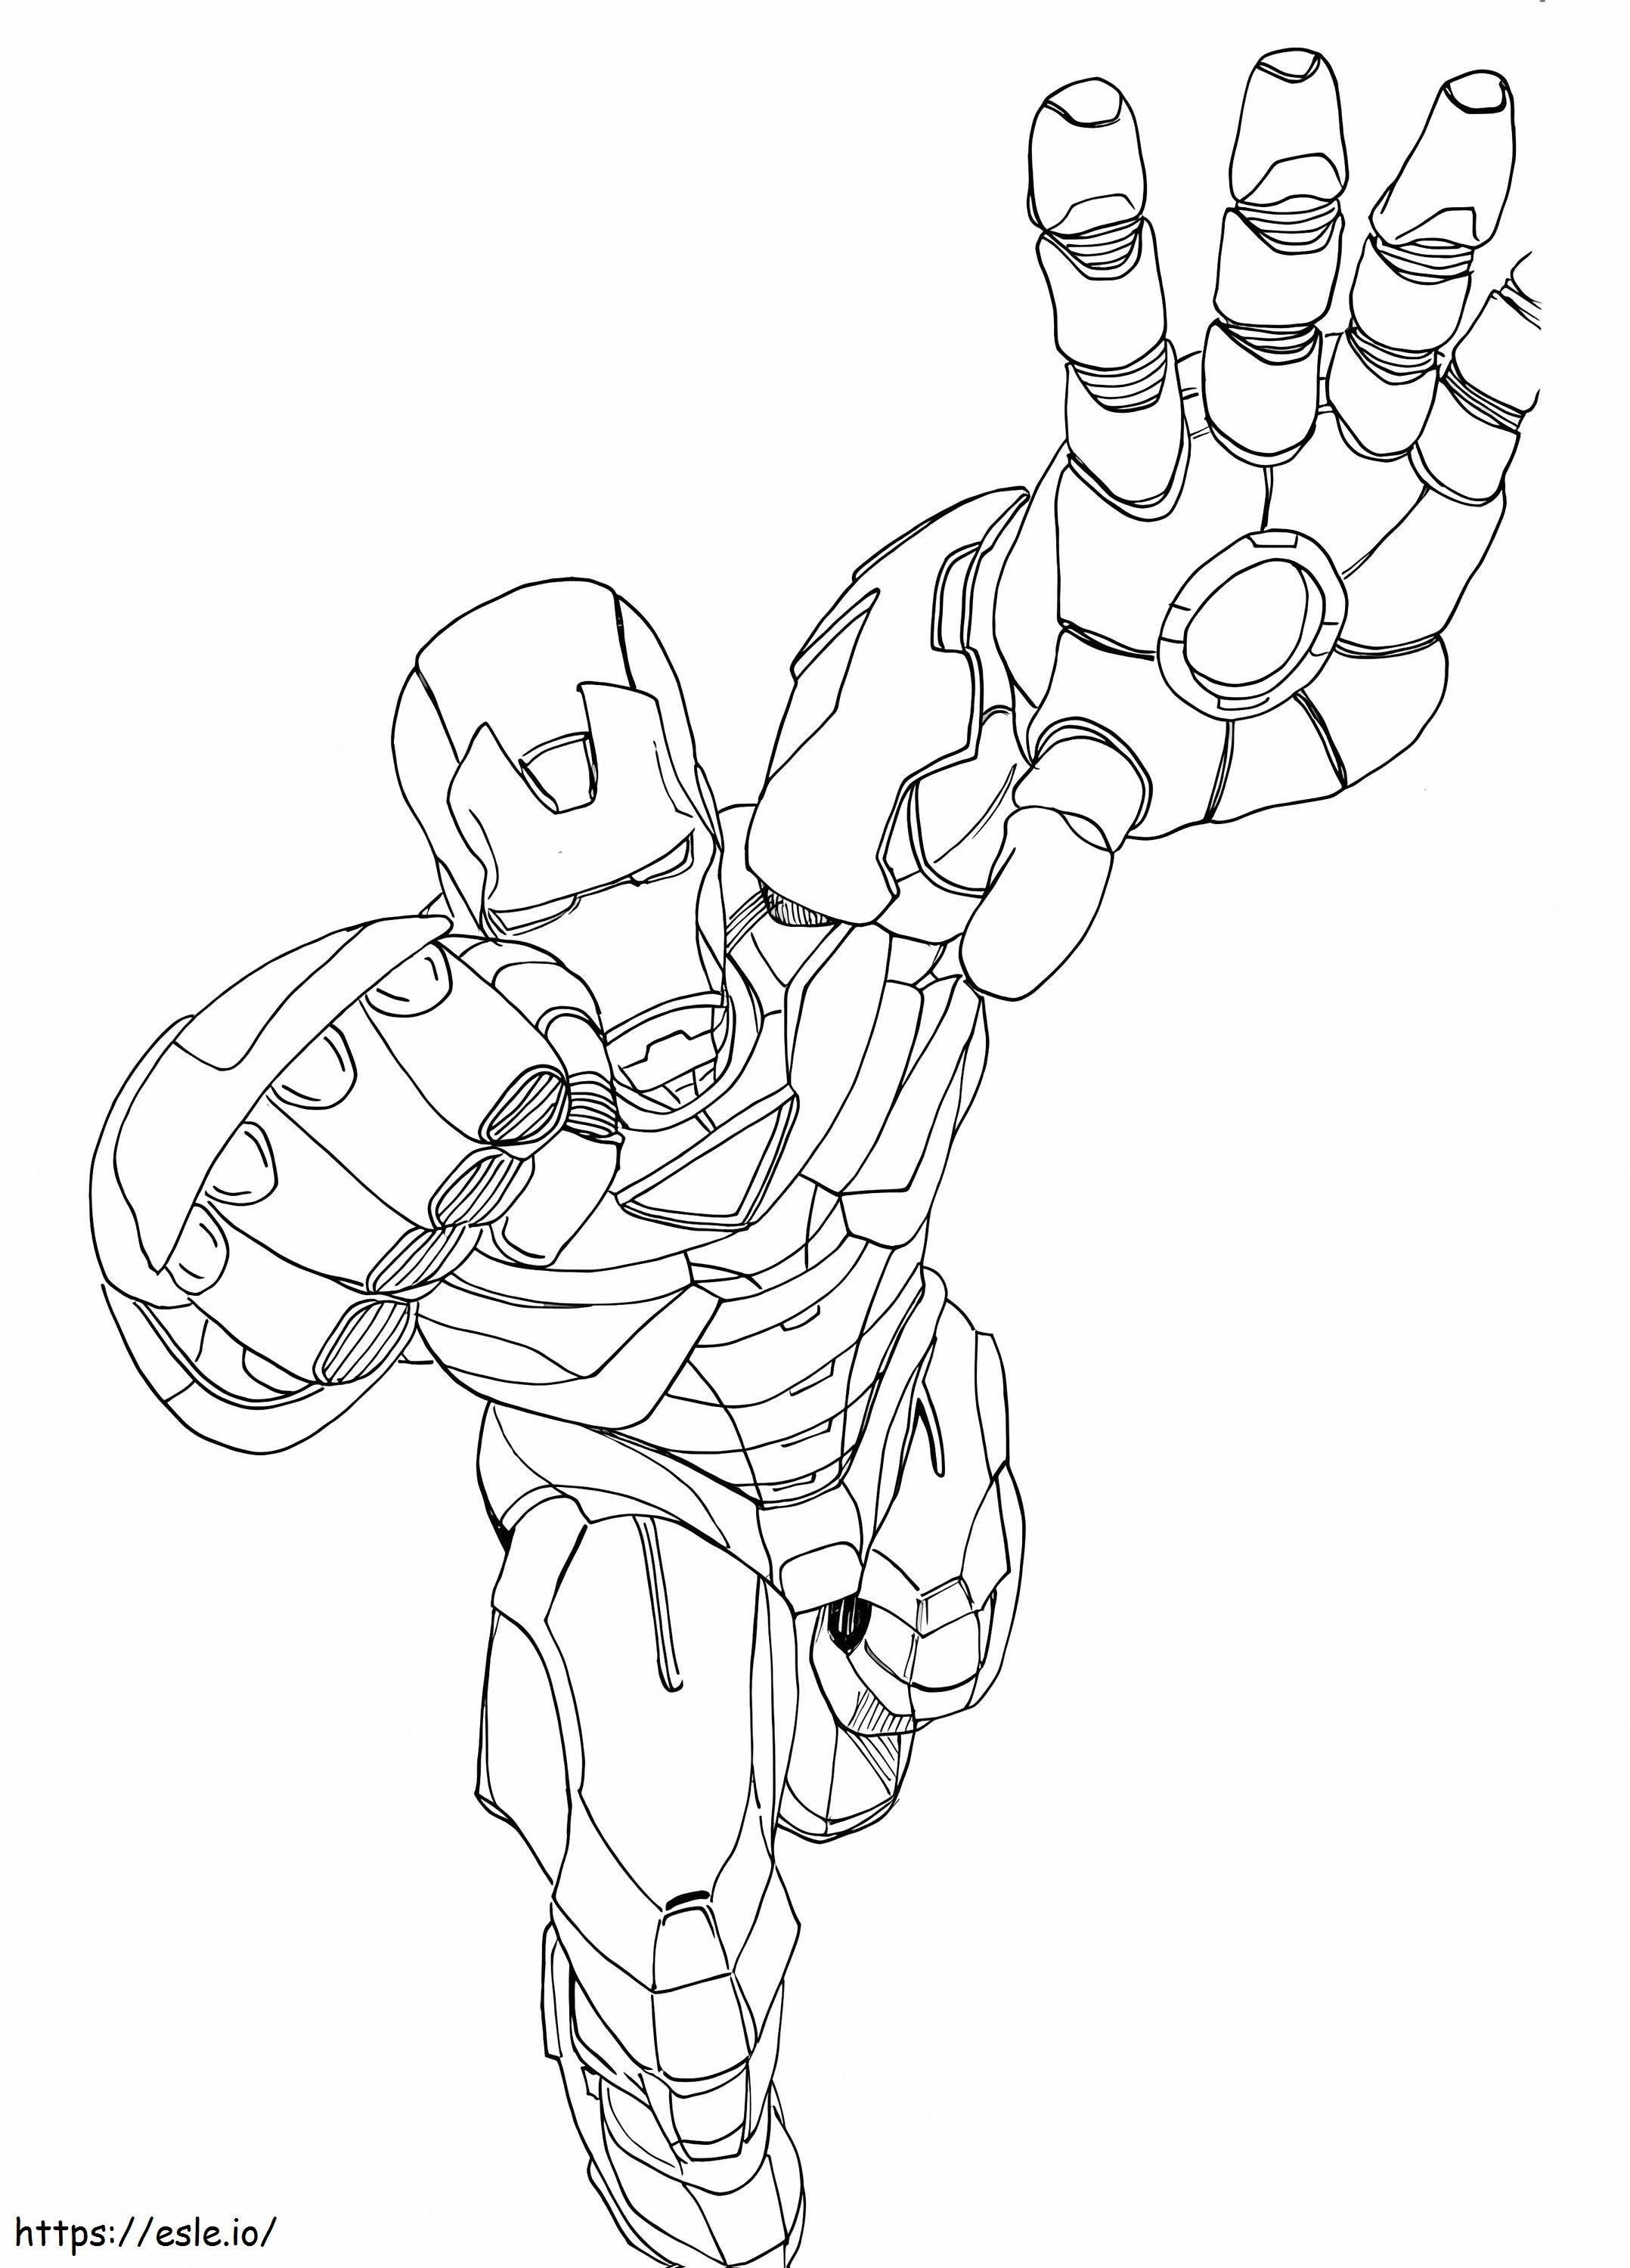 Hero Iron Man coloring page